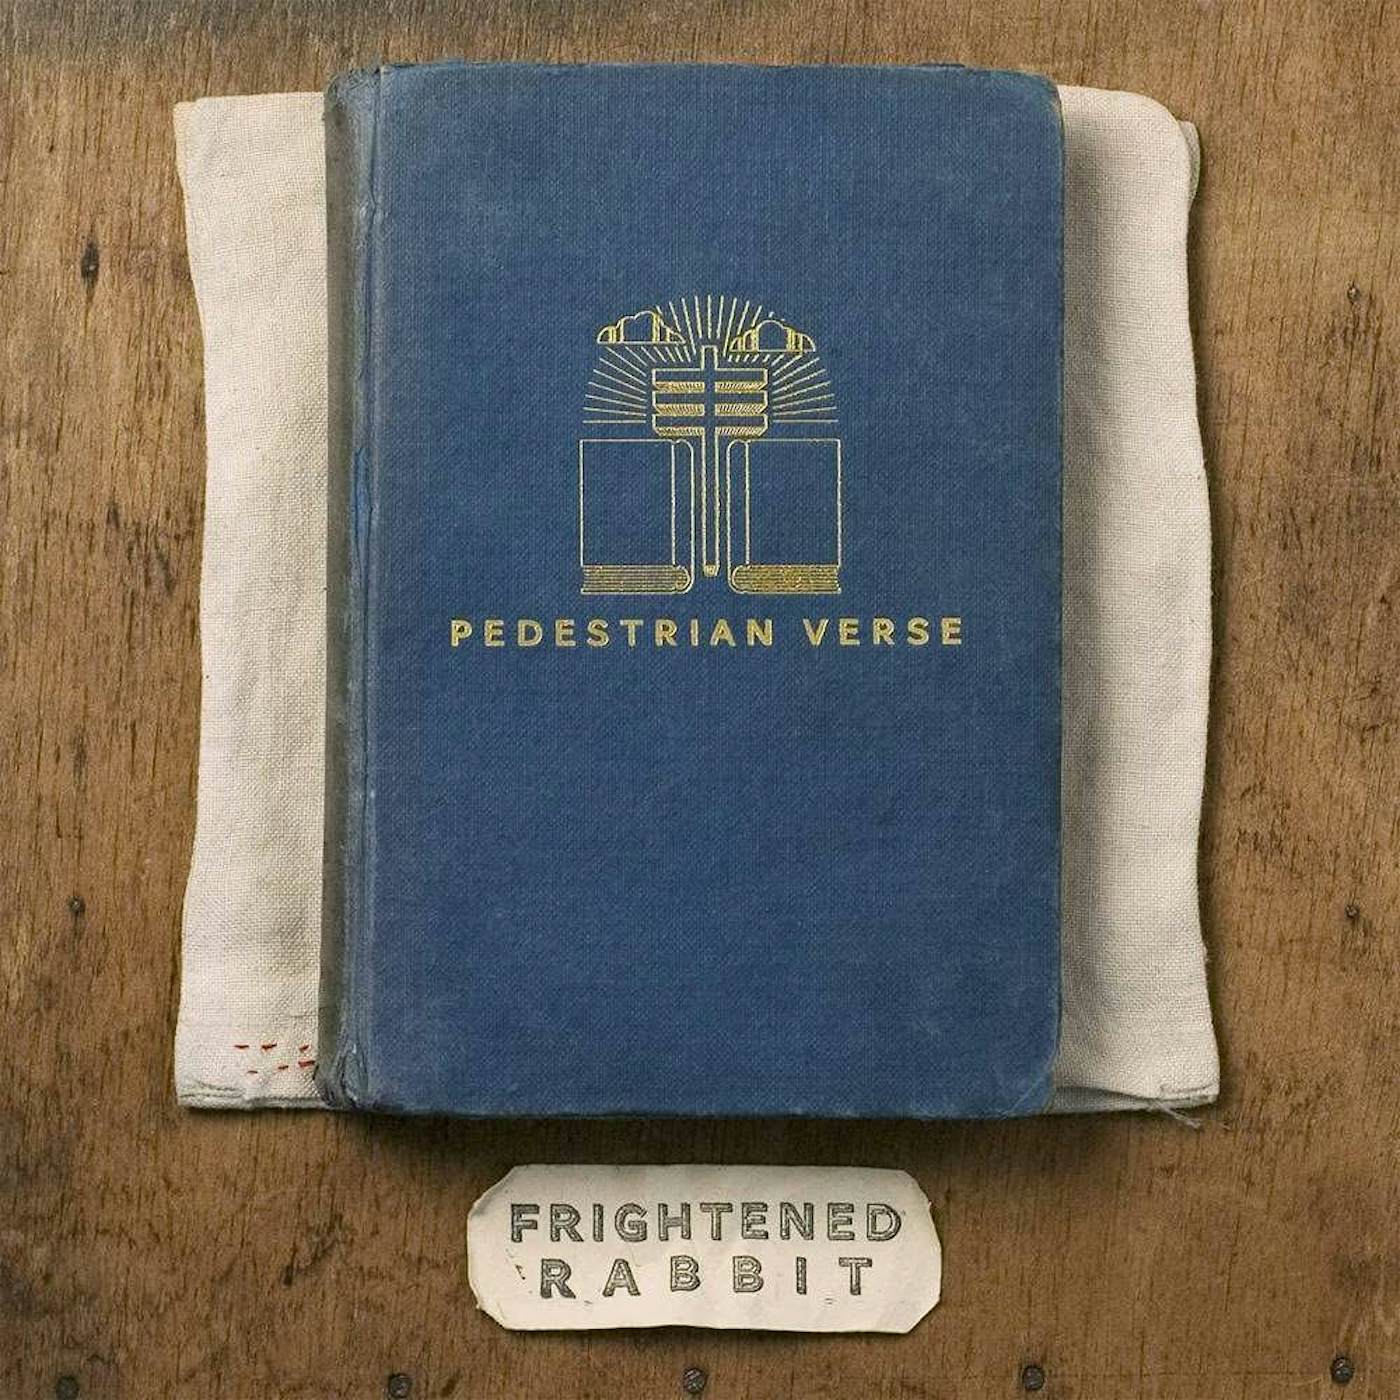 Frightened Rabbit Pedestrian Verse (10th Anniversary Edition) Vinyl Record